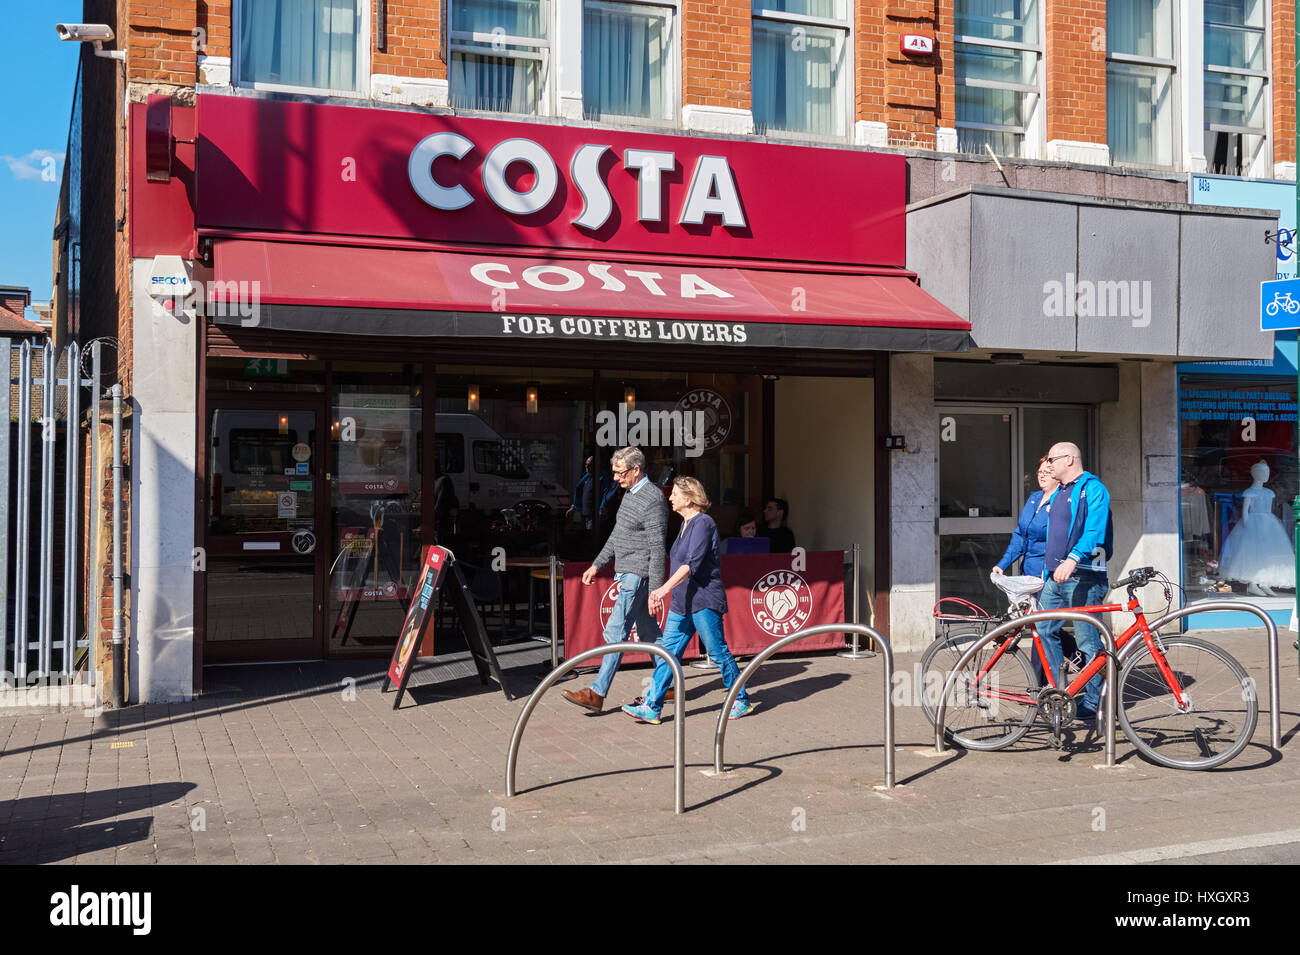 Costa cafe à traverser Leytonstone, Londres Angleterre Royaume-Uni UK Banque D'Images